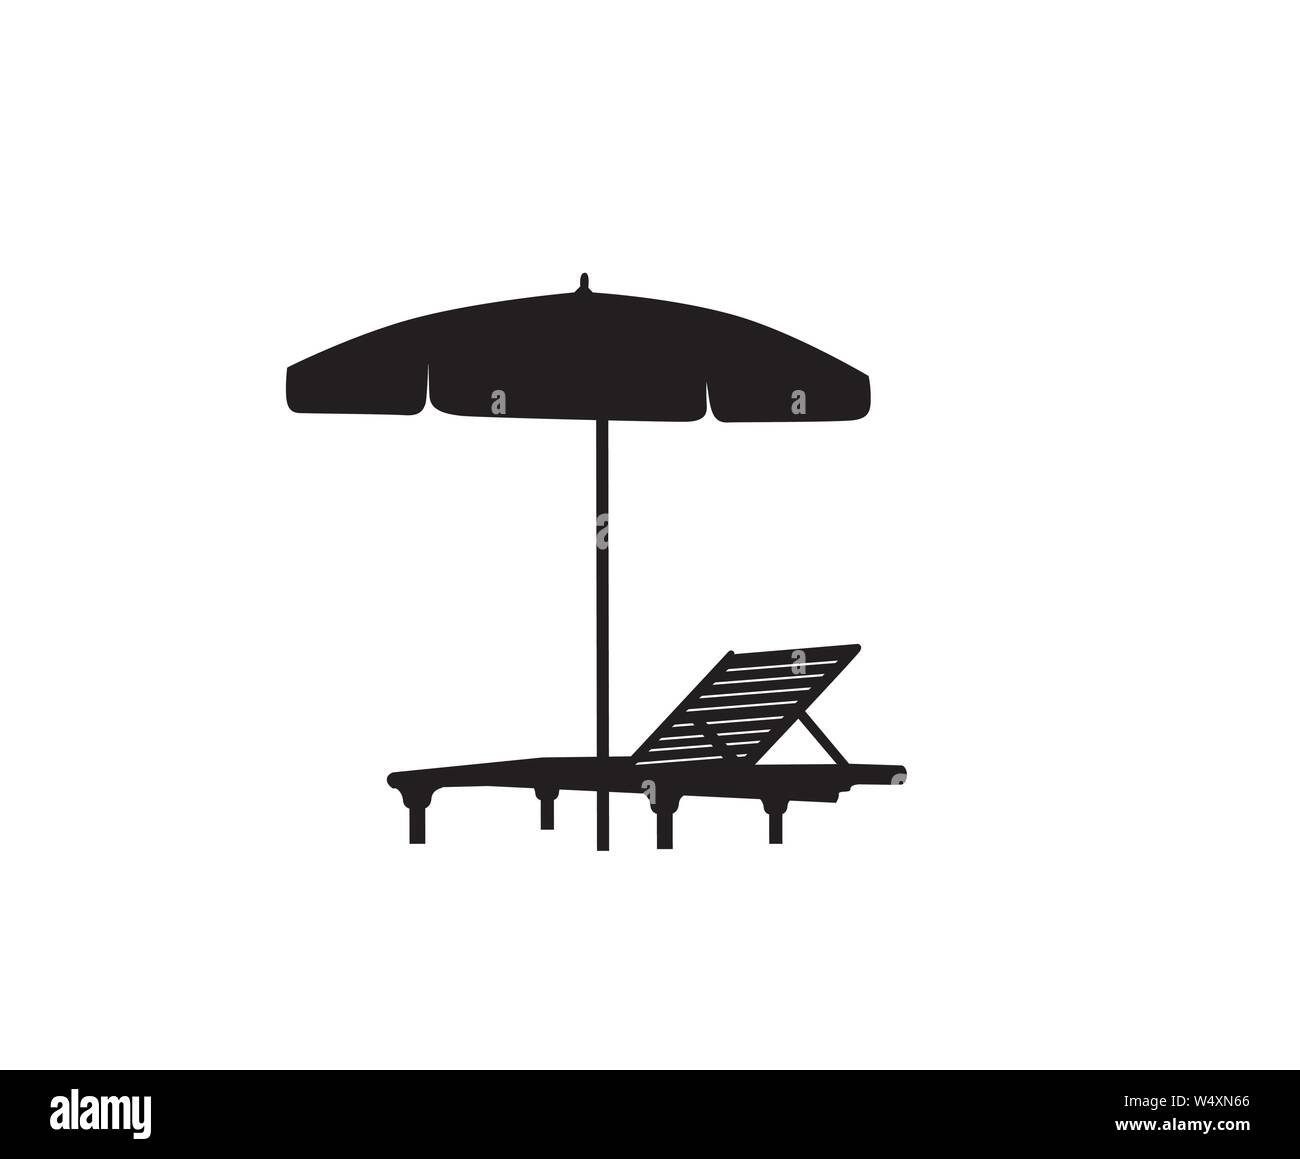 Deckchair umbrella summer beach holiday symbol silhouette icon. Chaise longue, parasol isolated. Sunbath beach resort symbol of the holidays Stock Vector